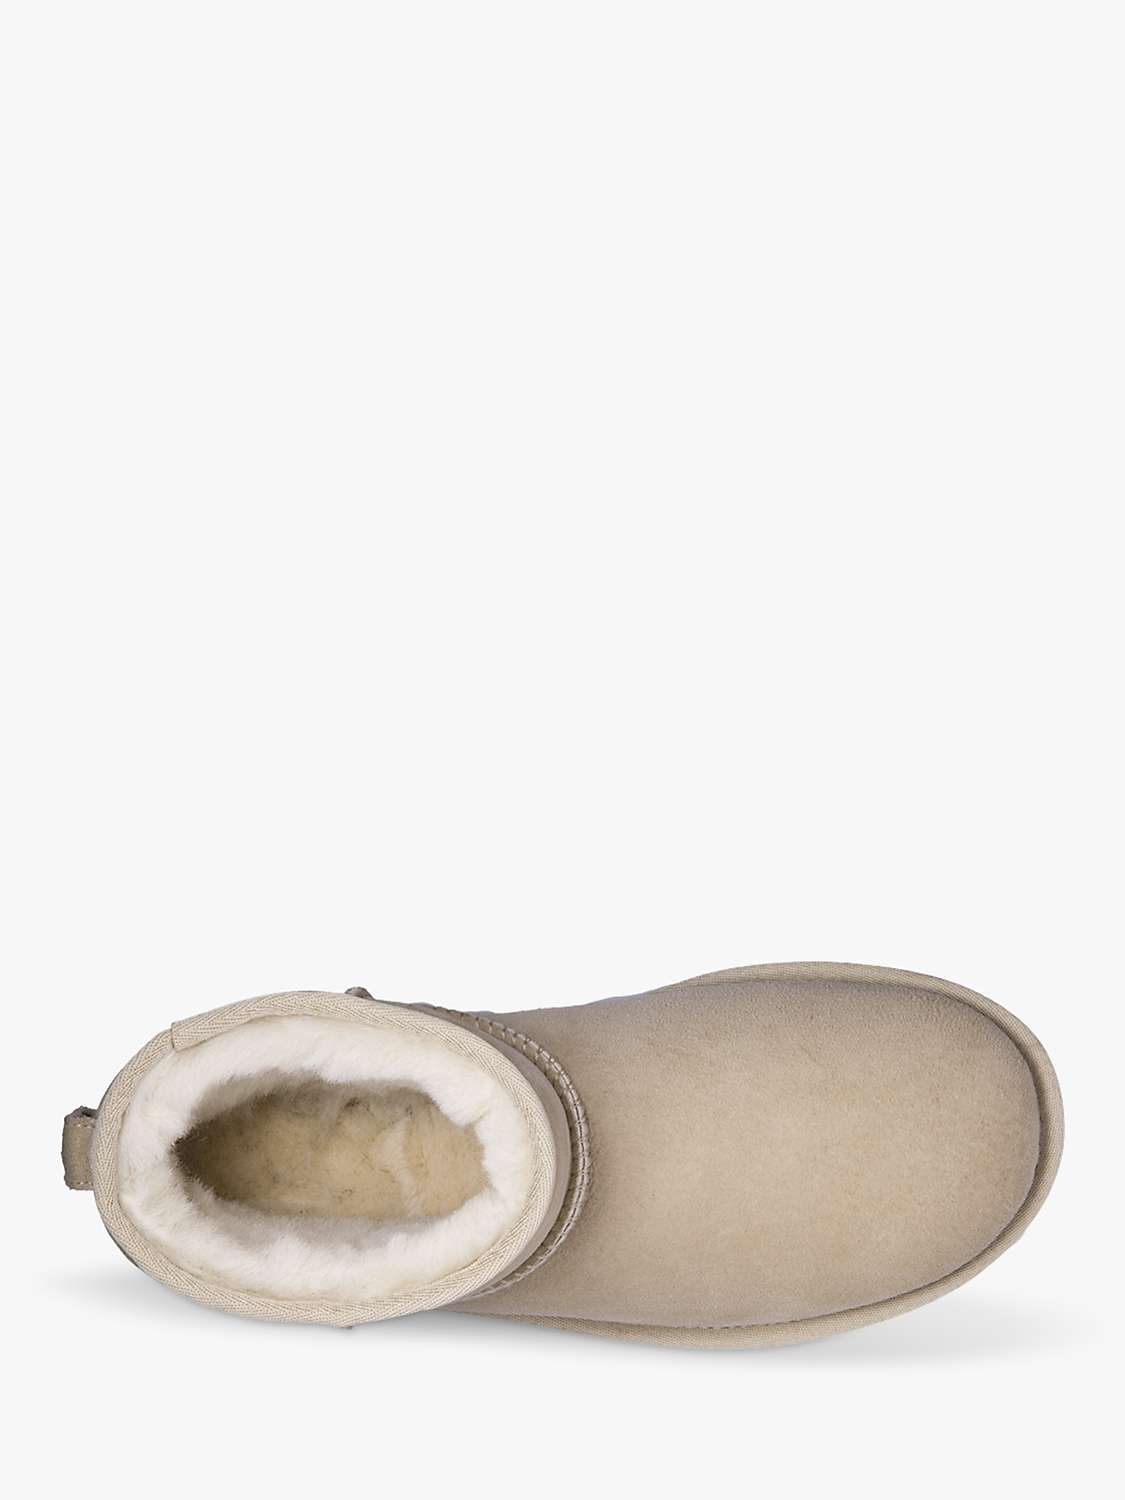 Buy UGG Classic Mini II Short Sheepskin Boots Online at johnlewis.com